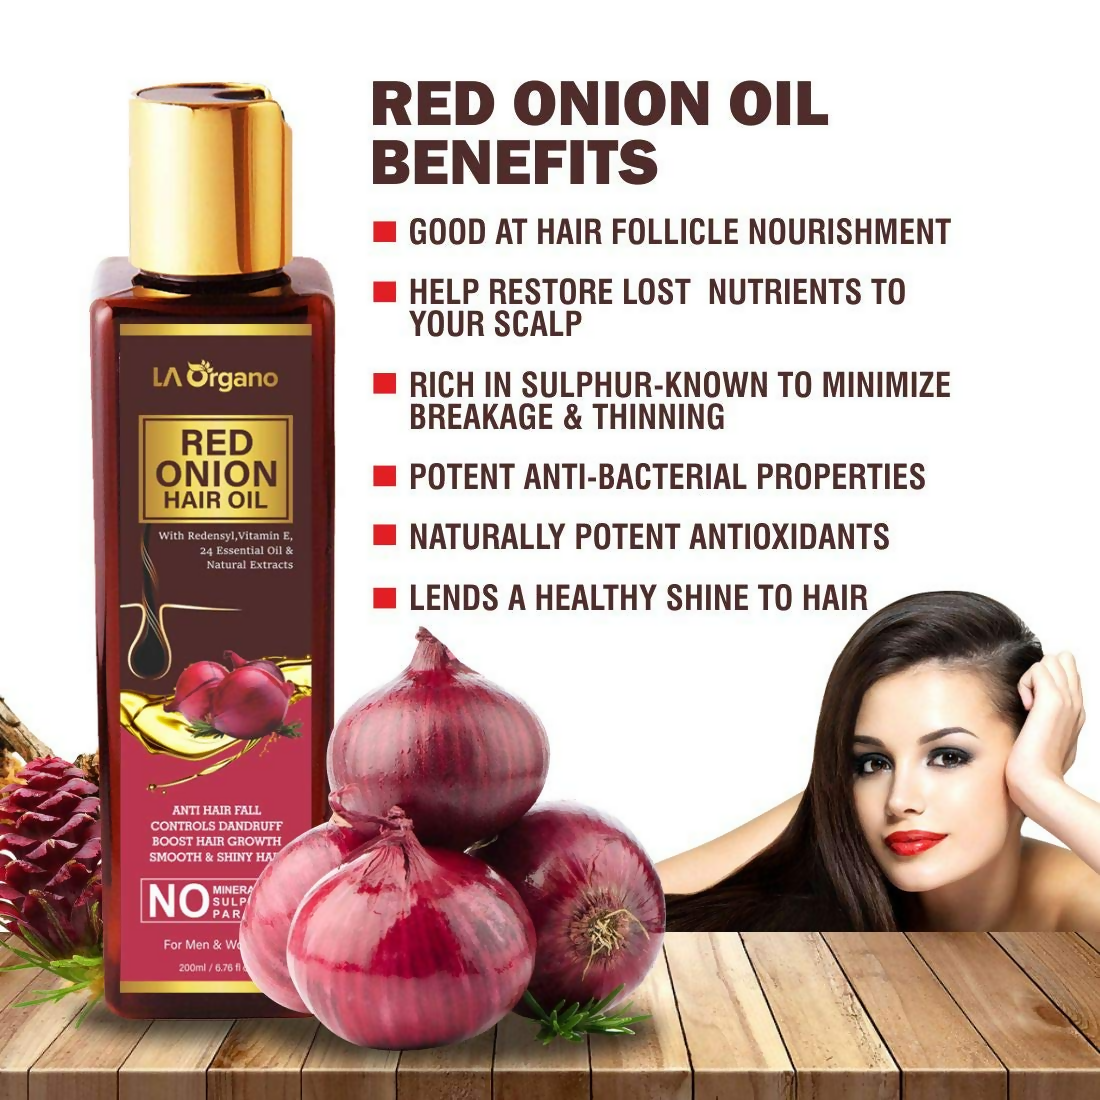 LA Organo Red Onion Hair Oil